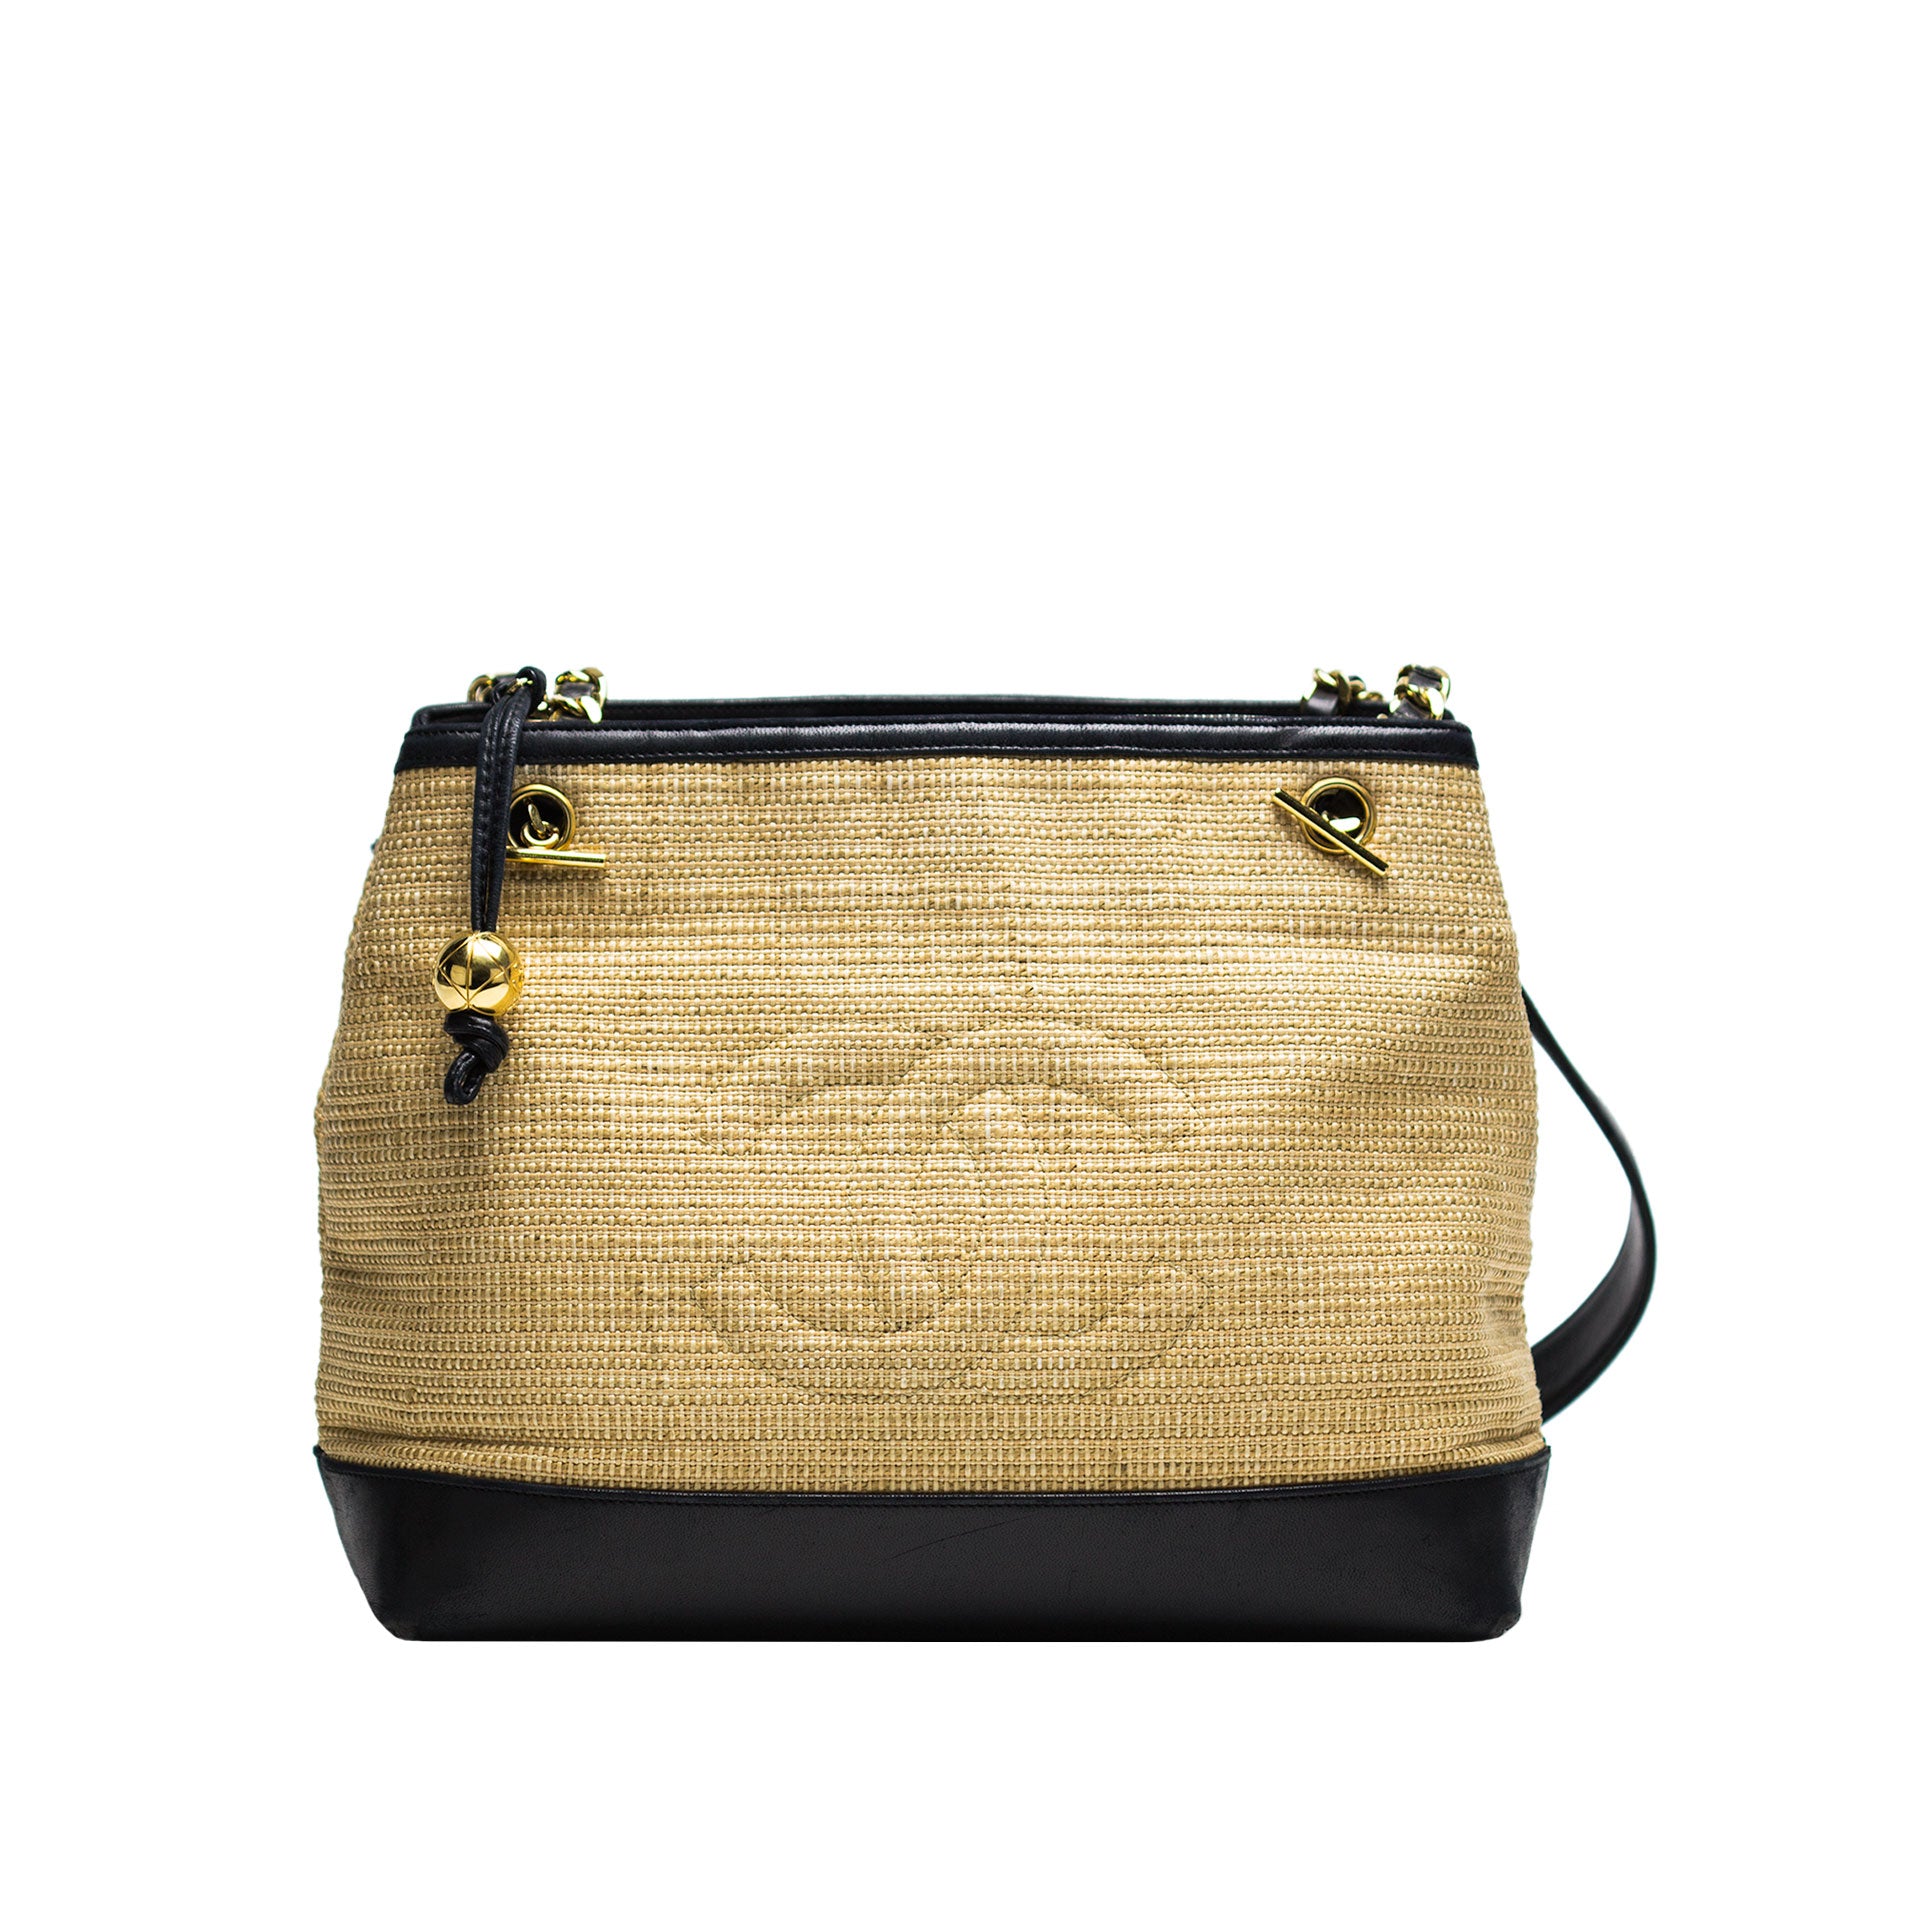 Chanel Hobo Handbag Straw Wicker Cc Shopper Tote 7ca527 Beige X